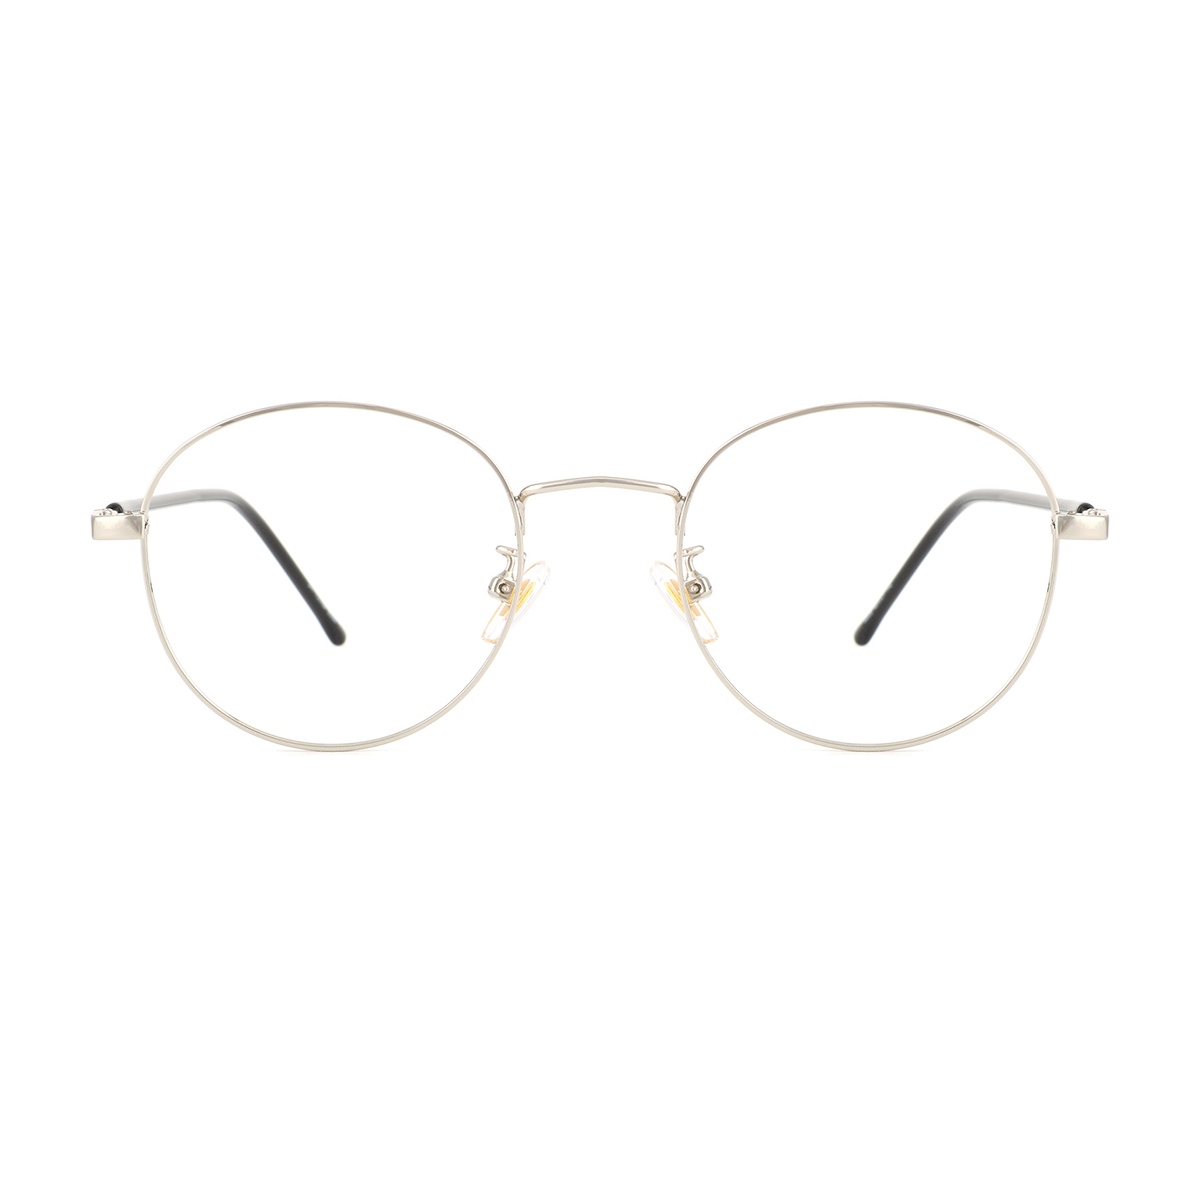 oval silver eyeglasses